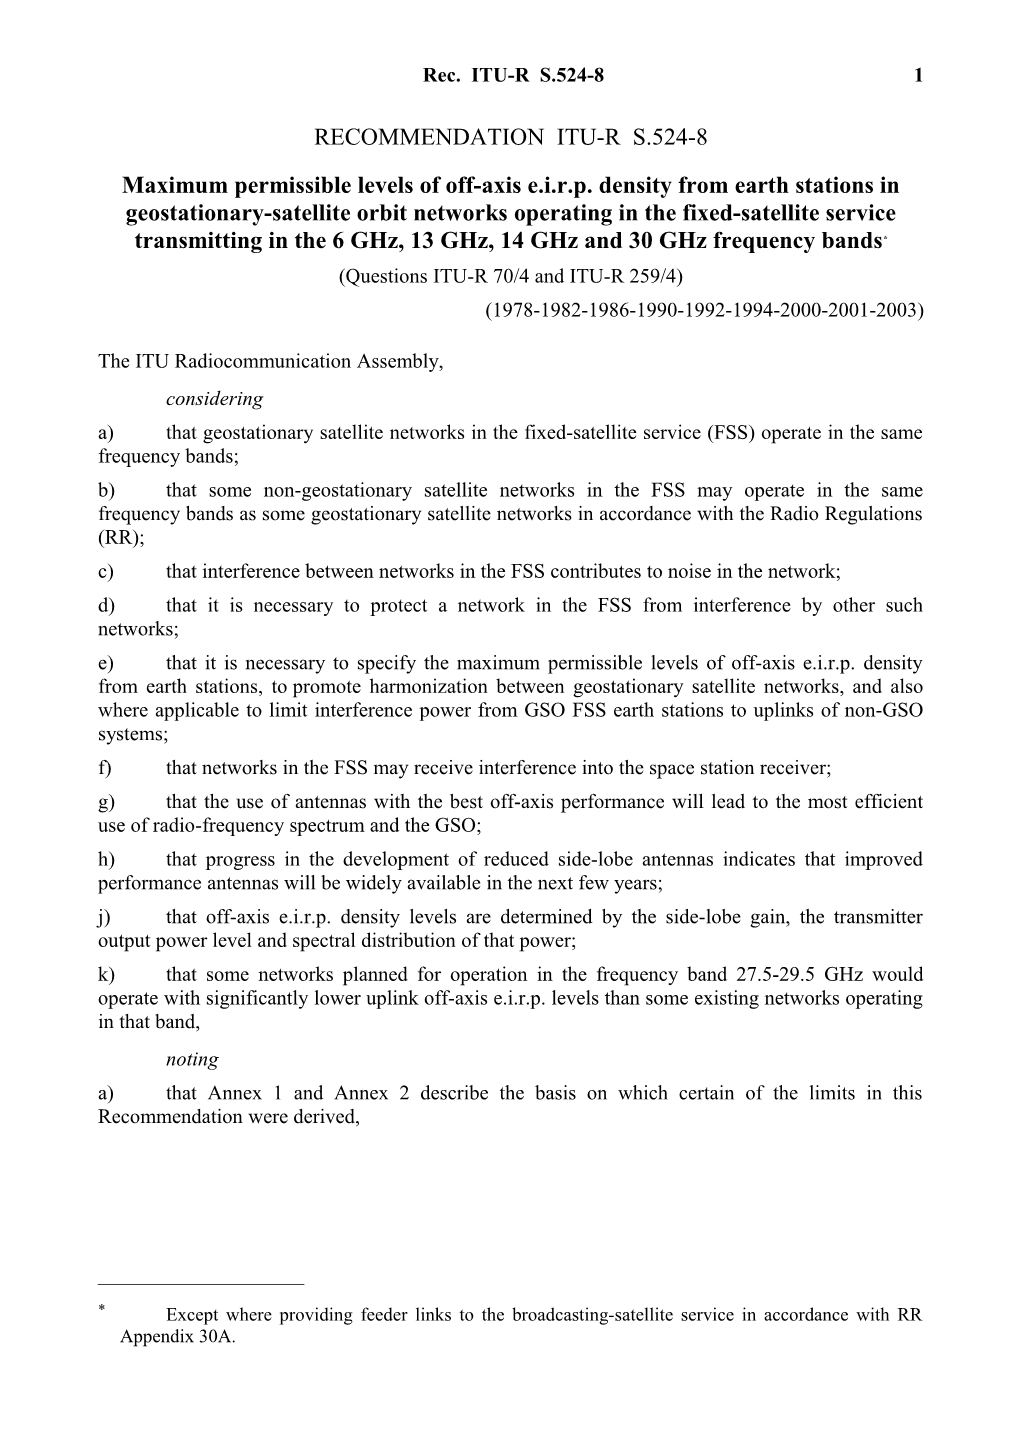 RECOMMENDATION ITU-R S.524-8 - Maximum Permissible Levels of Off-Axis E.I.R.P. Density